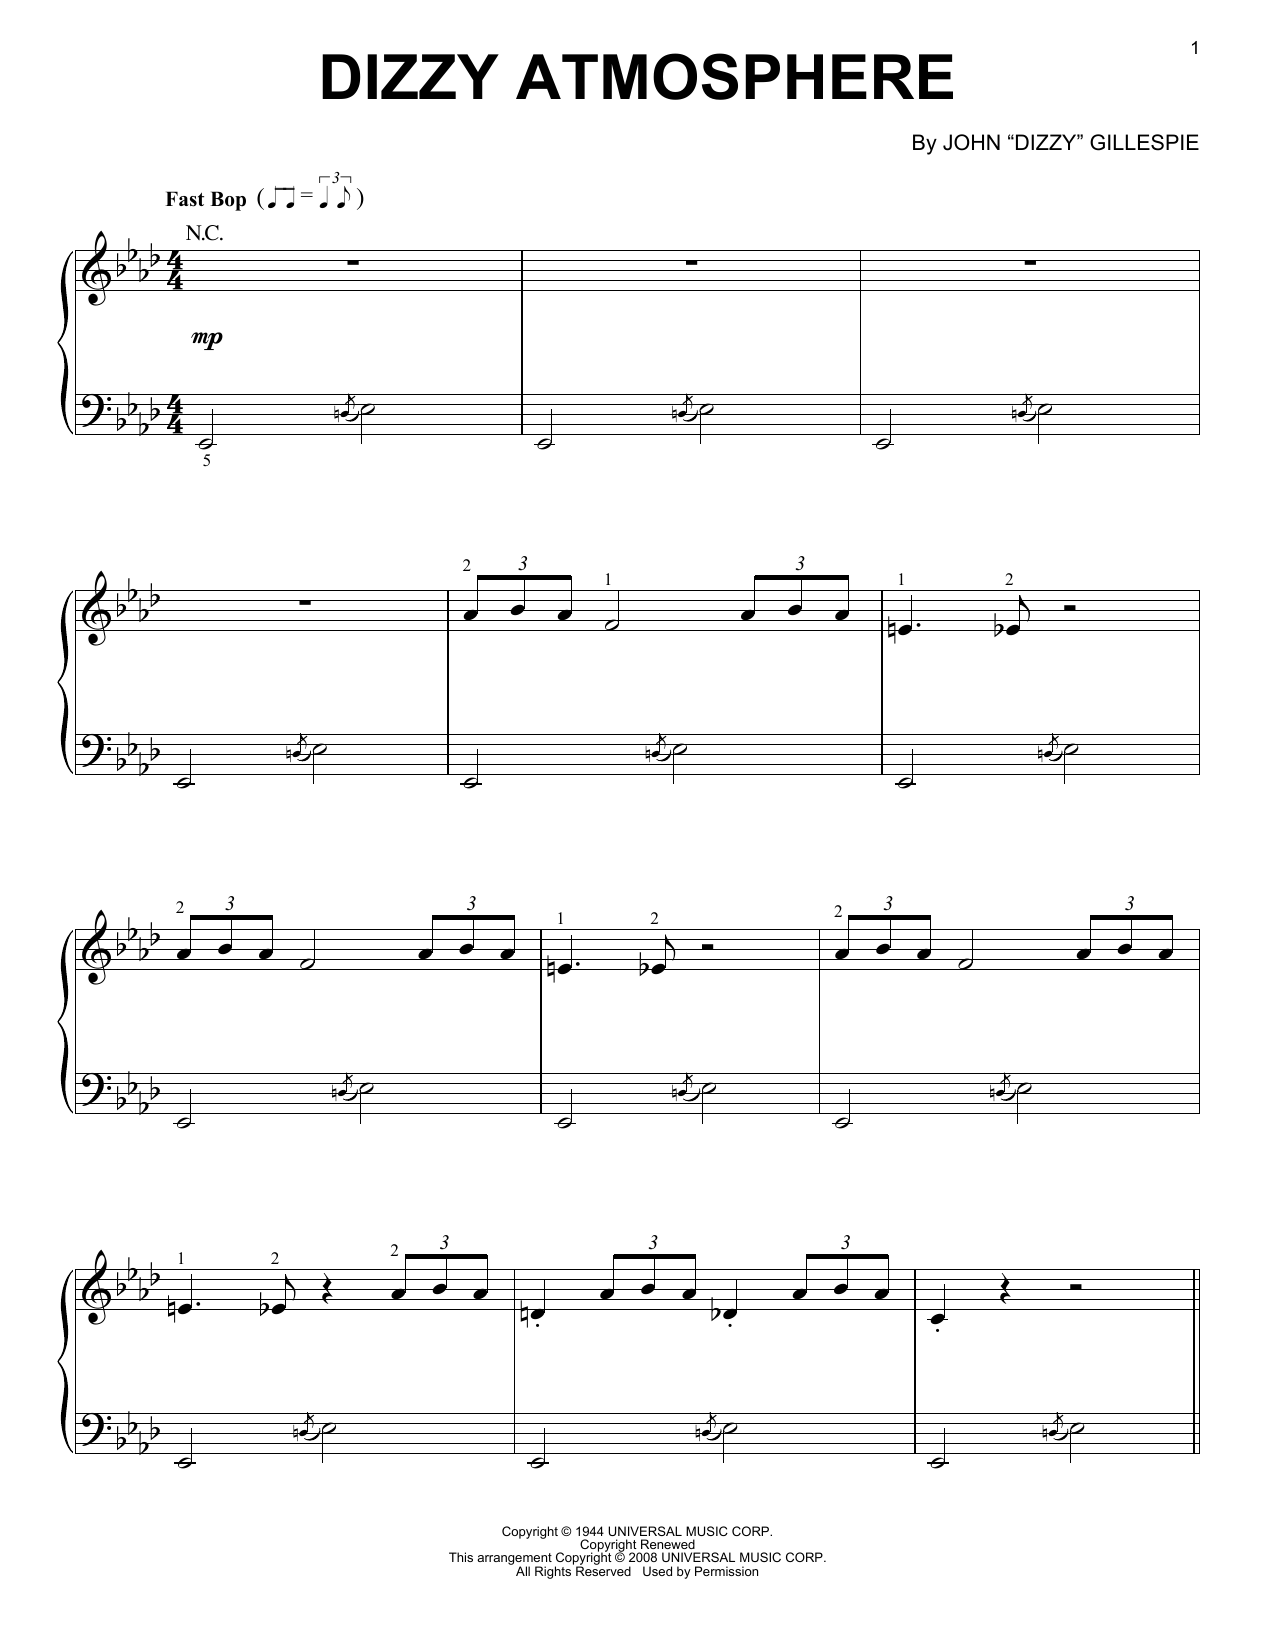 Charlie Parker Dizzy Atmosphere Sheet Music Notes & Chords for Alto Sax Transcription - Download or Print PDF